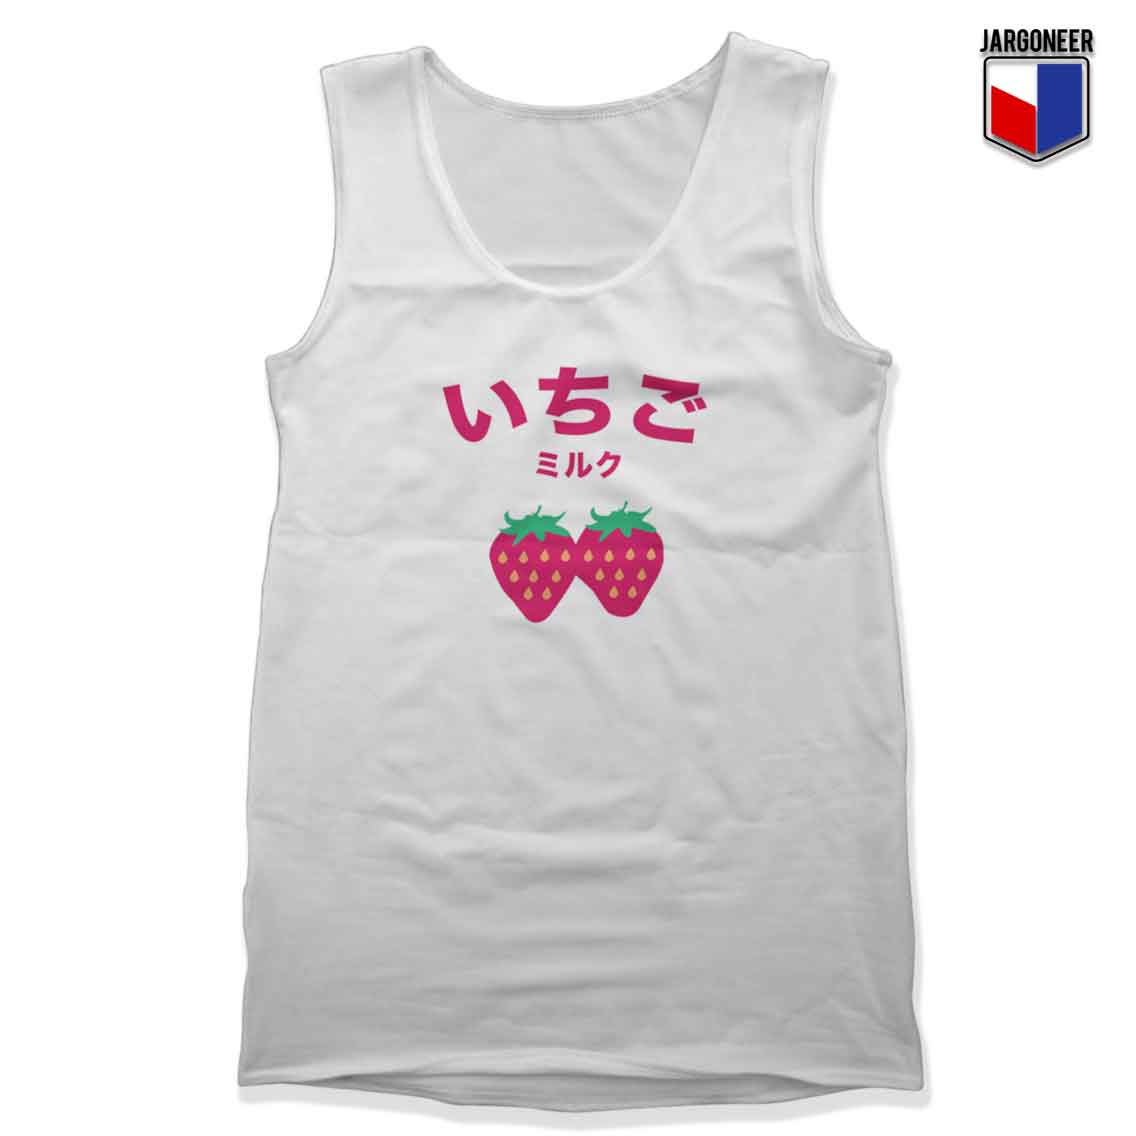 Ichigo Strawberry Milk 1 - Shop Unique Graphic Cool Shirt Designs